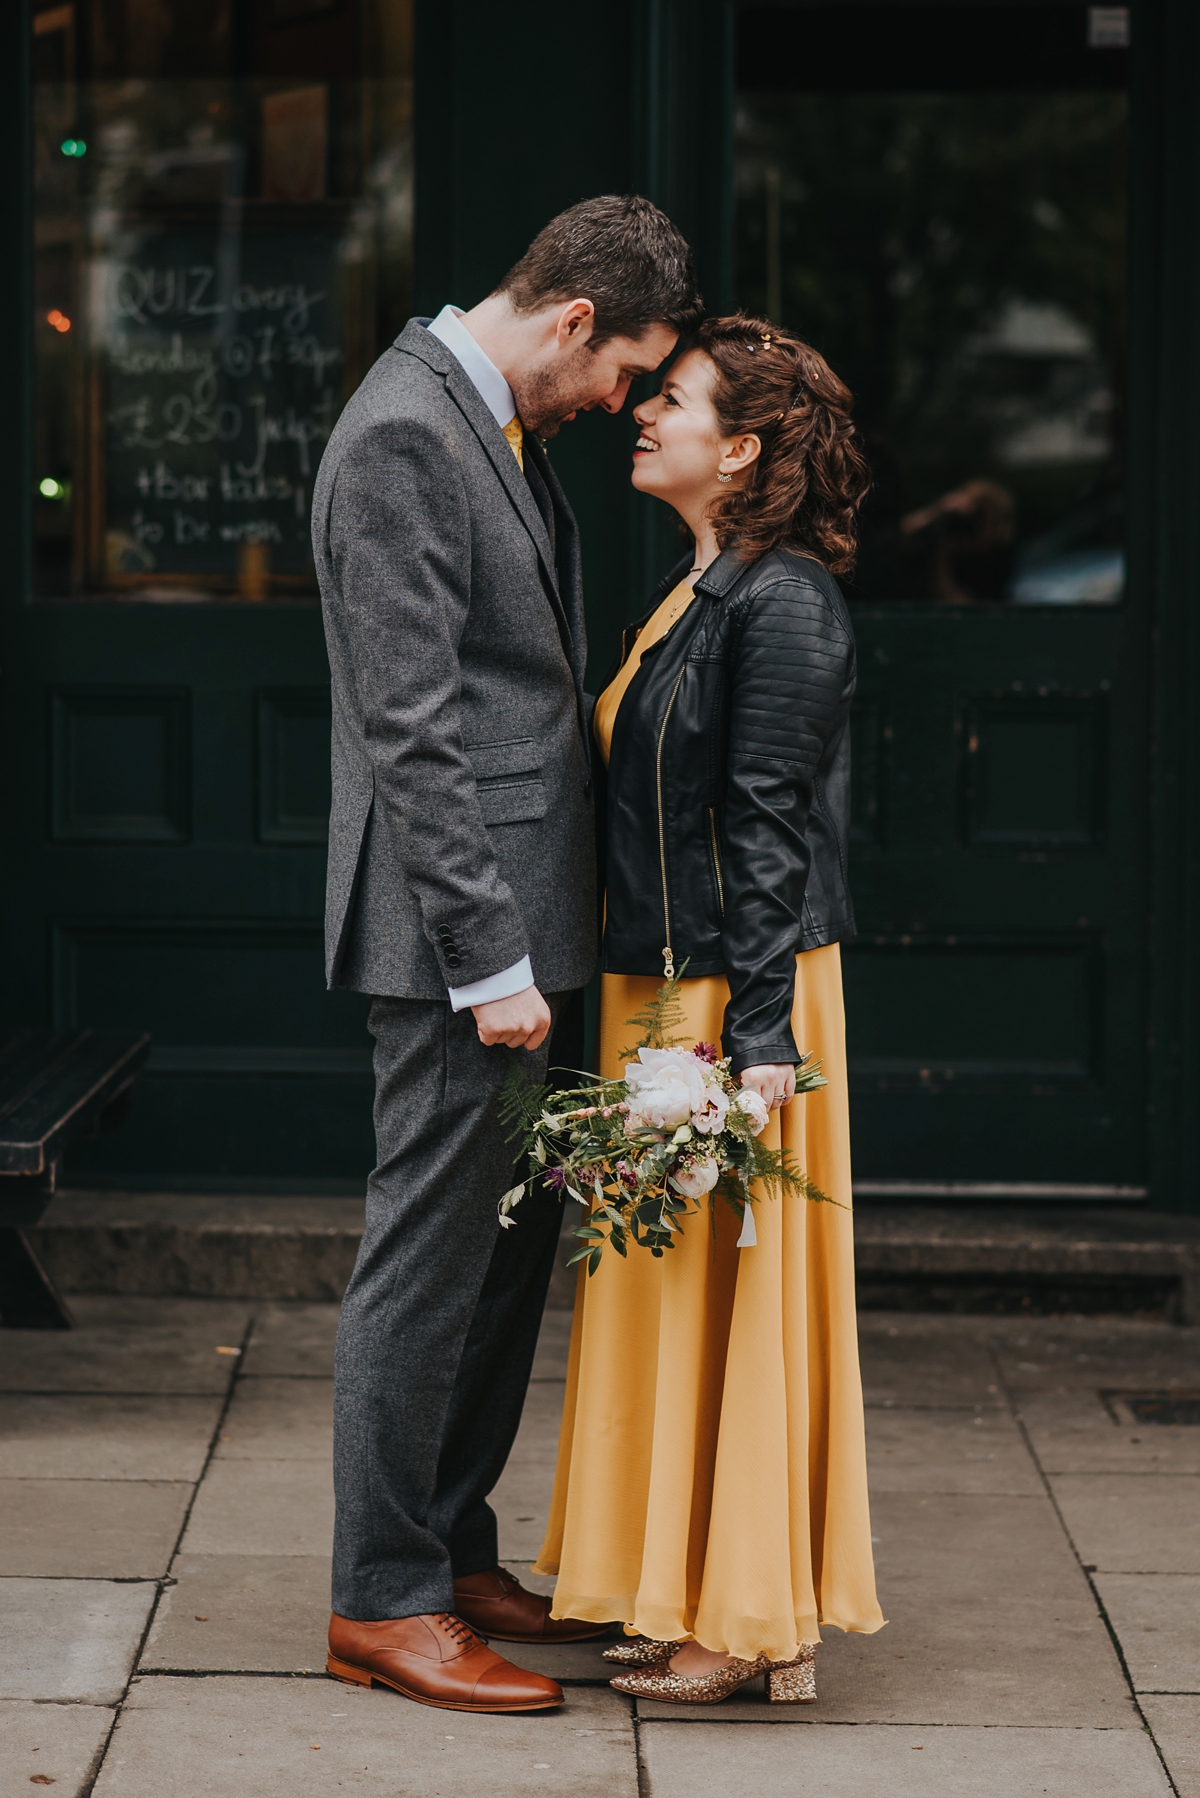 34 A yellow dress for a modern London pub wedding